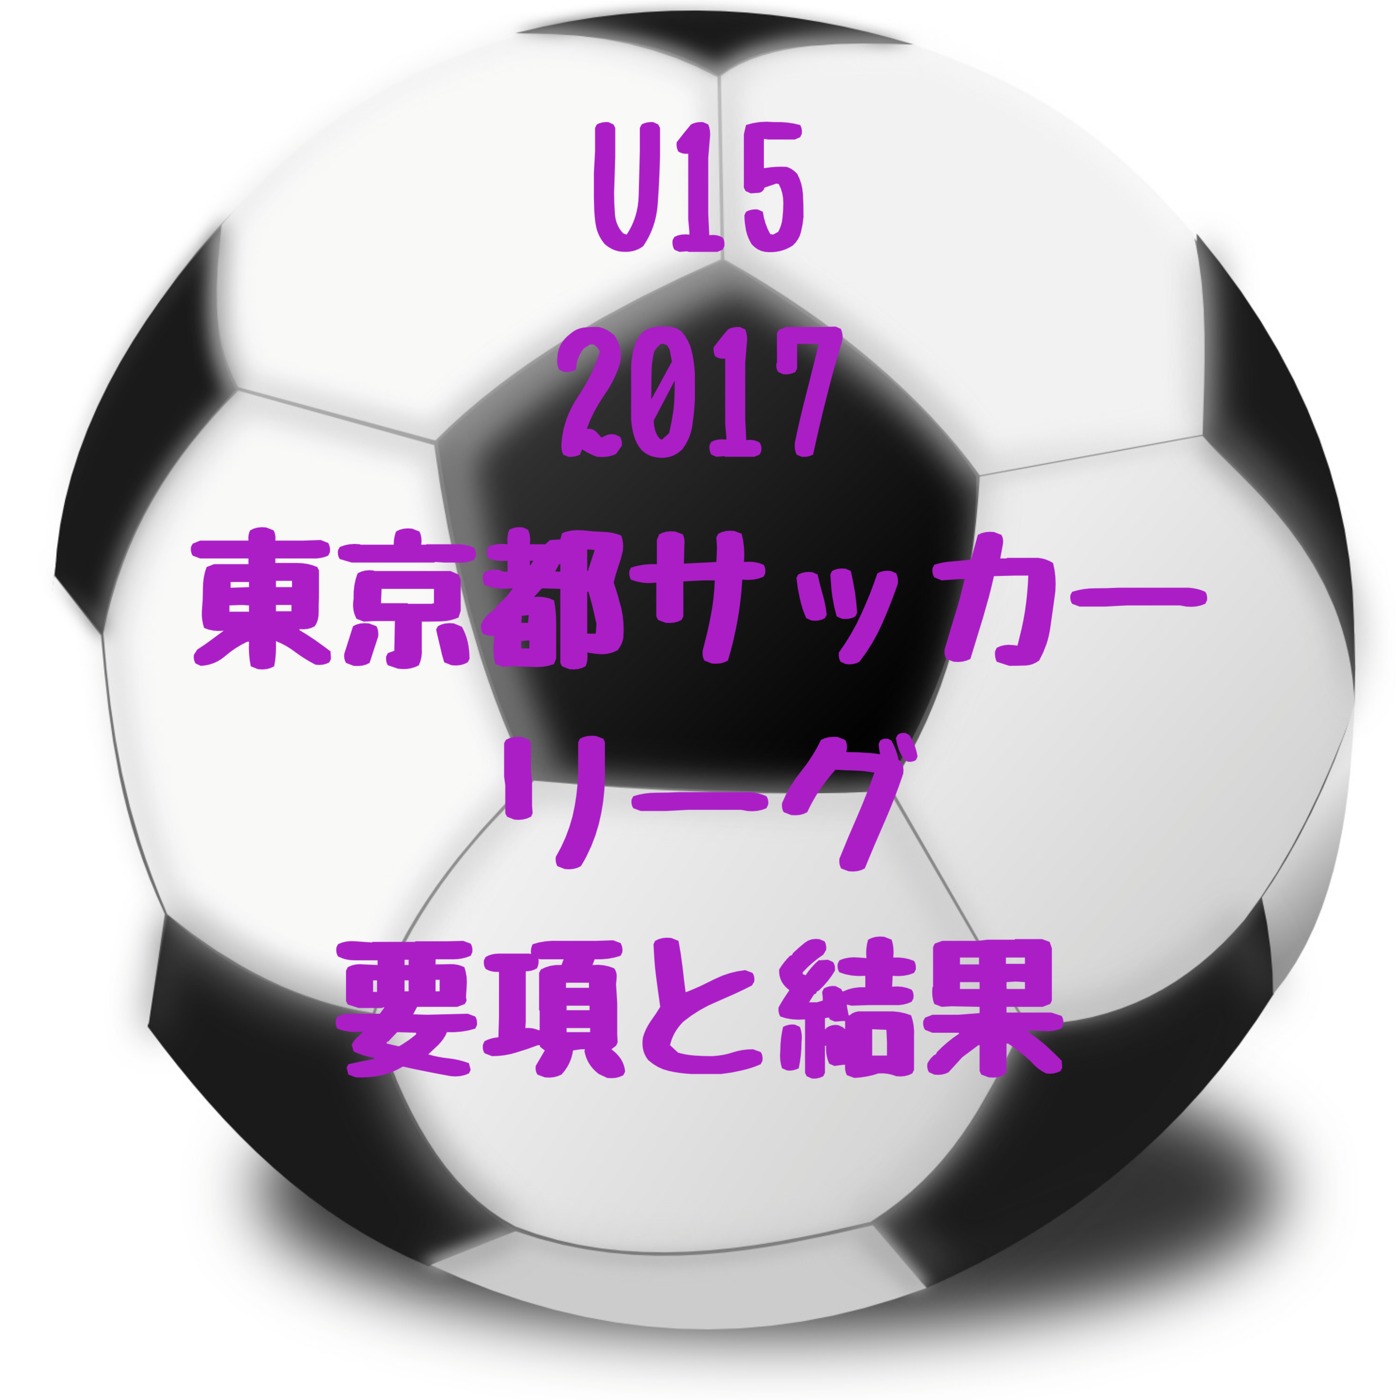 U15 Tリーグサッカー18 東京都 T1 T3リーグ 最終順位